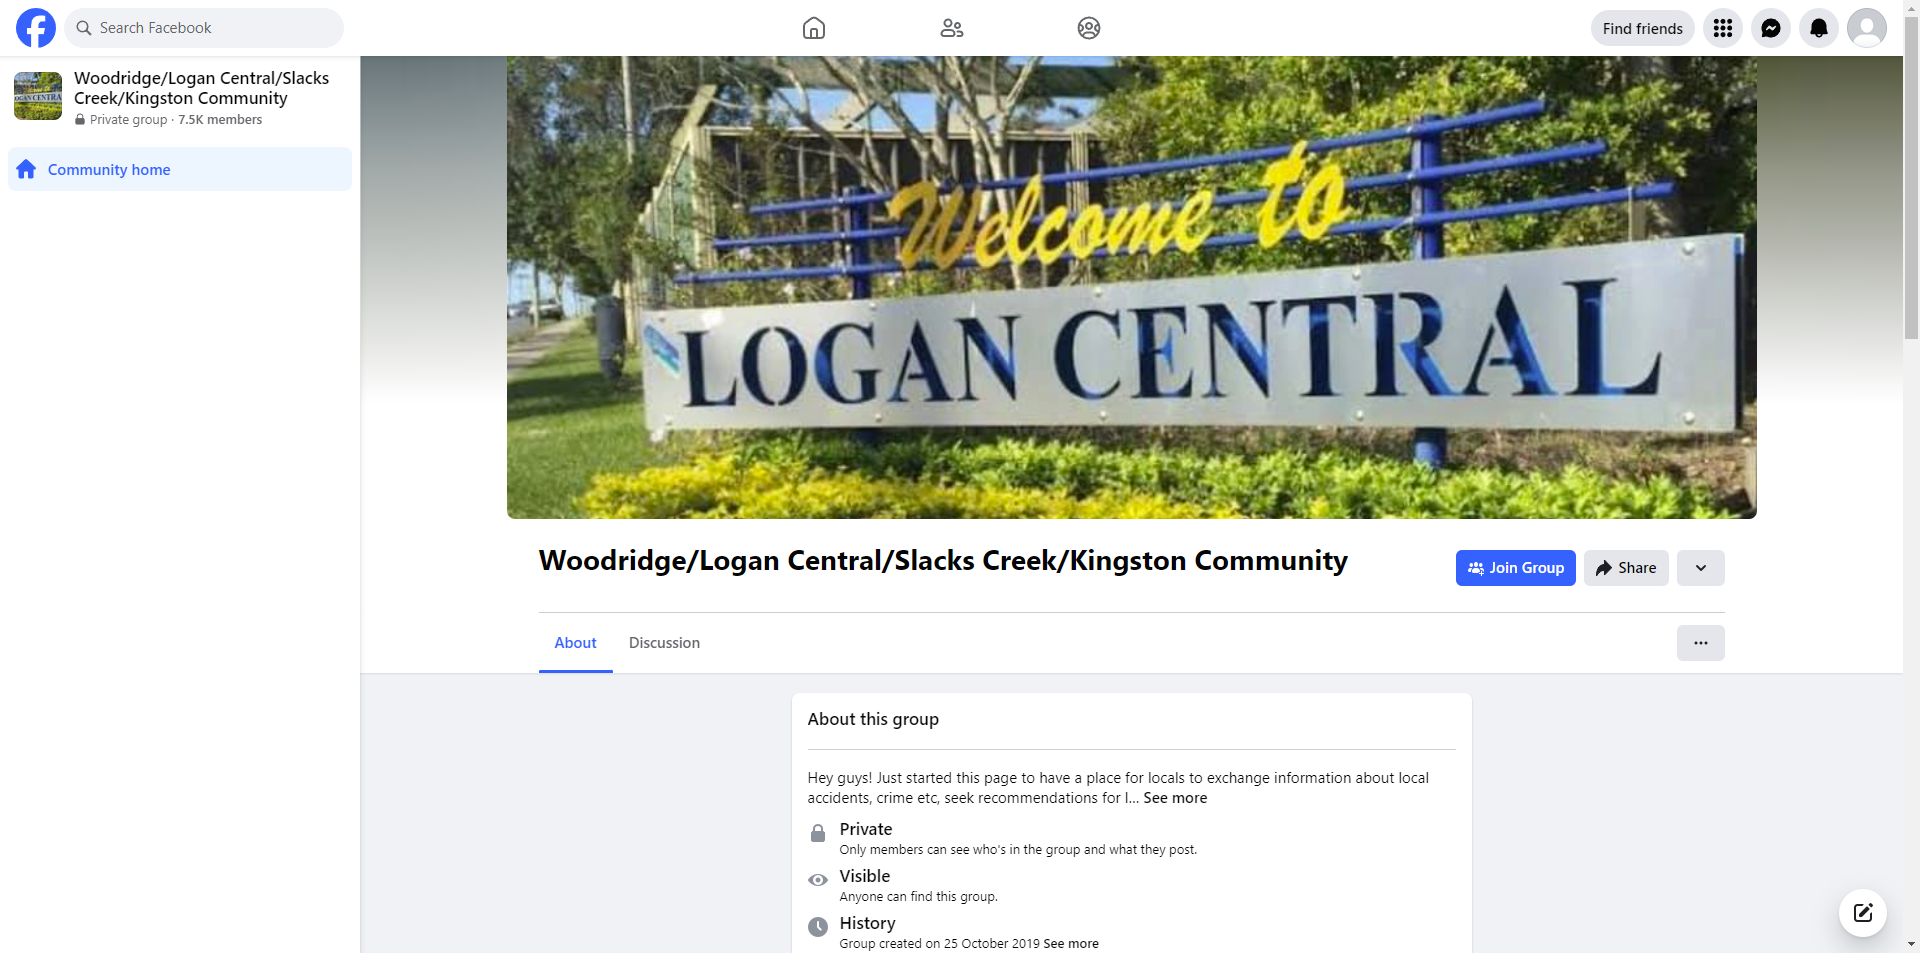 Woodridge/Logan Central/Slacks Creek/Kingston Community